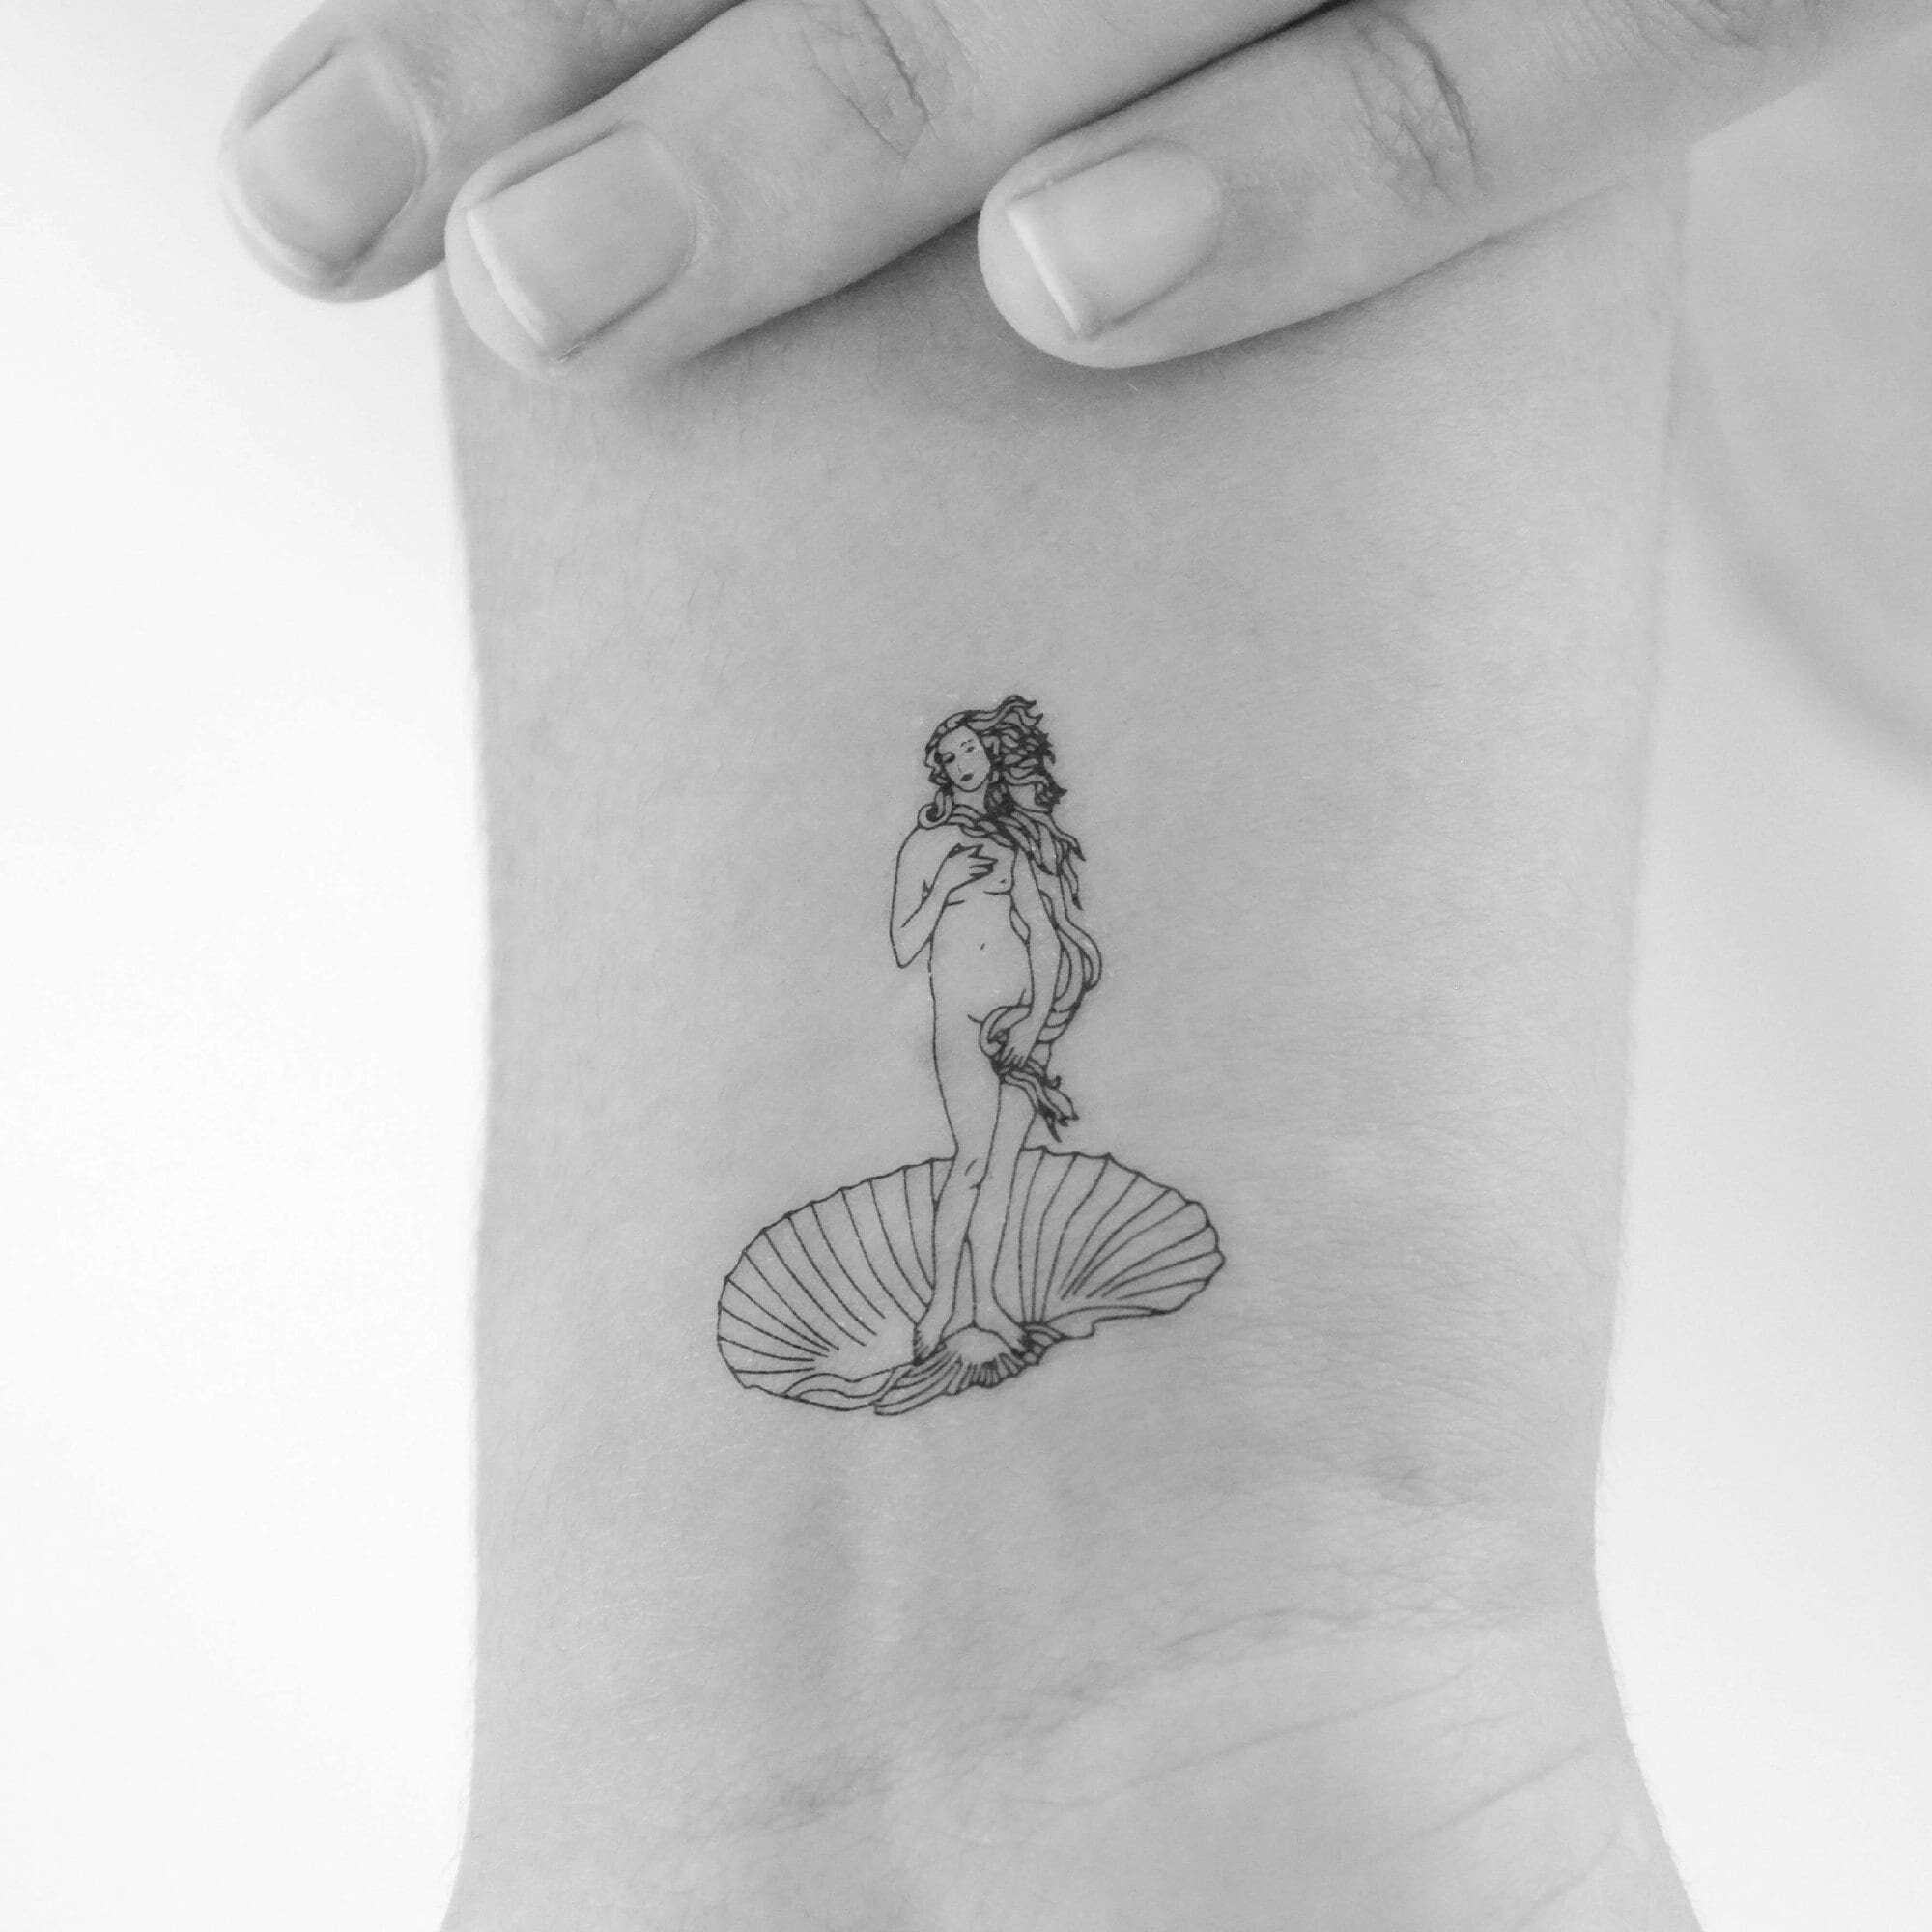 Tattoo tagged with: feminist, small, micro, tiny, planet symbol, ifttt,  little, evankim, astrology, wrist, minimalist, other, venus symbol |  inked-app.com